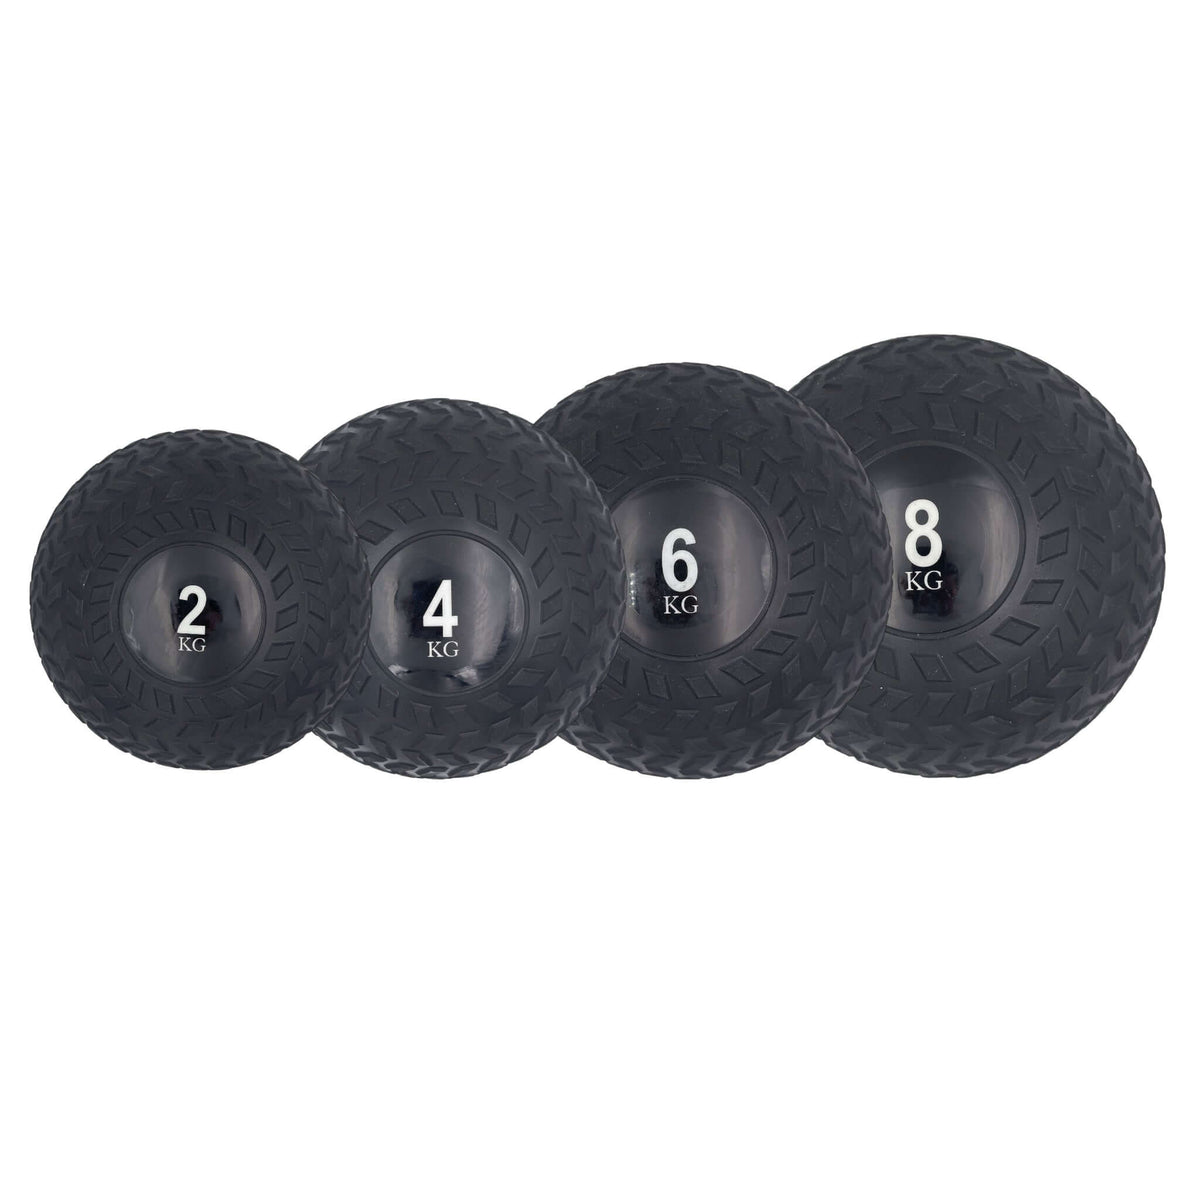 4 Pack of Tyre Thread Slam Balls - 2kg 4kg 6kg 8kg